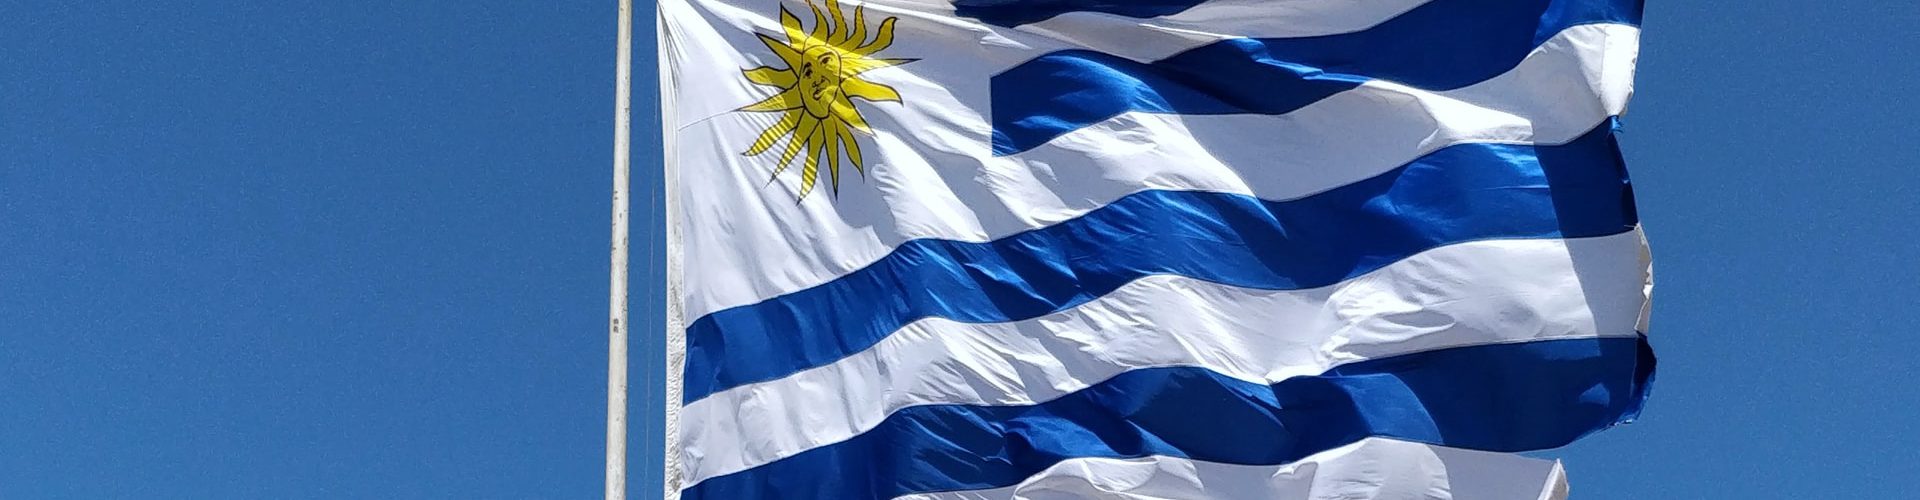 Uruguay is a top software development destination in Latin America